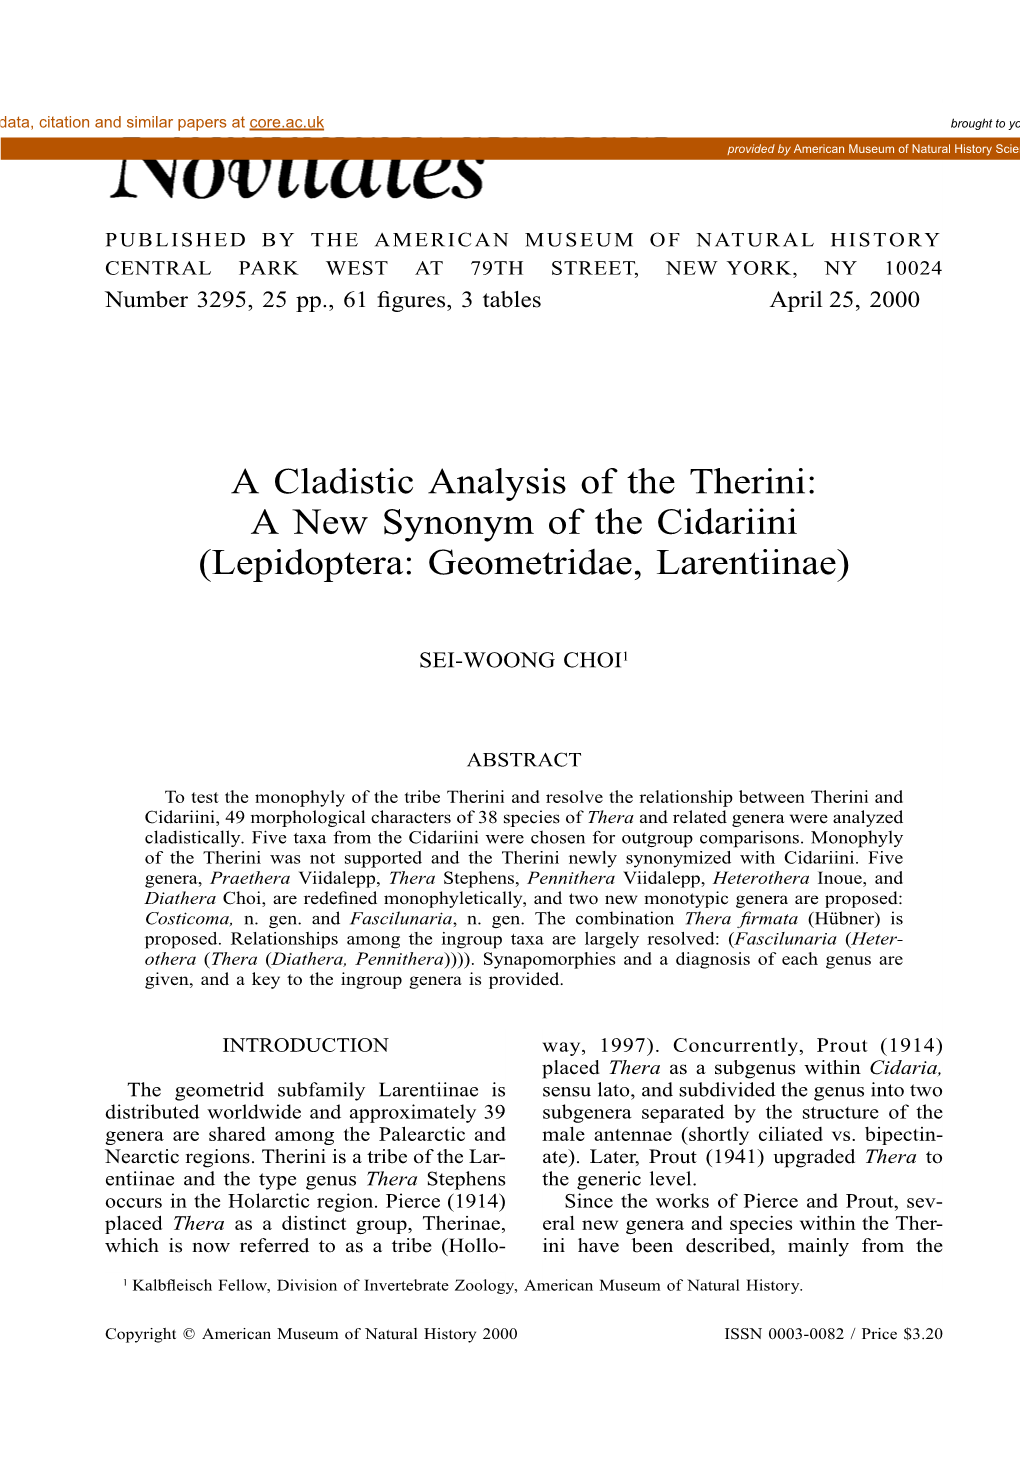 A Cladistic Analysis of the Therini: a New Synonym of the Cidariini (Lepidoptera: Geometridae, Larentiinae)